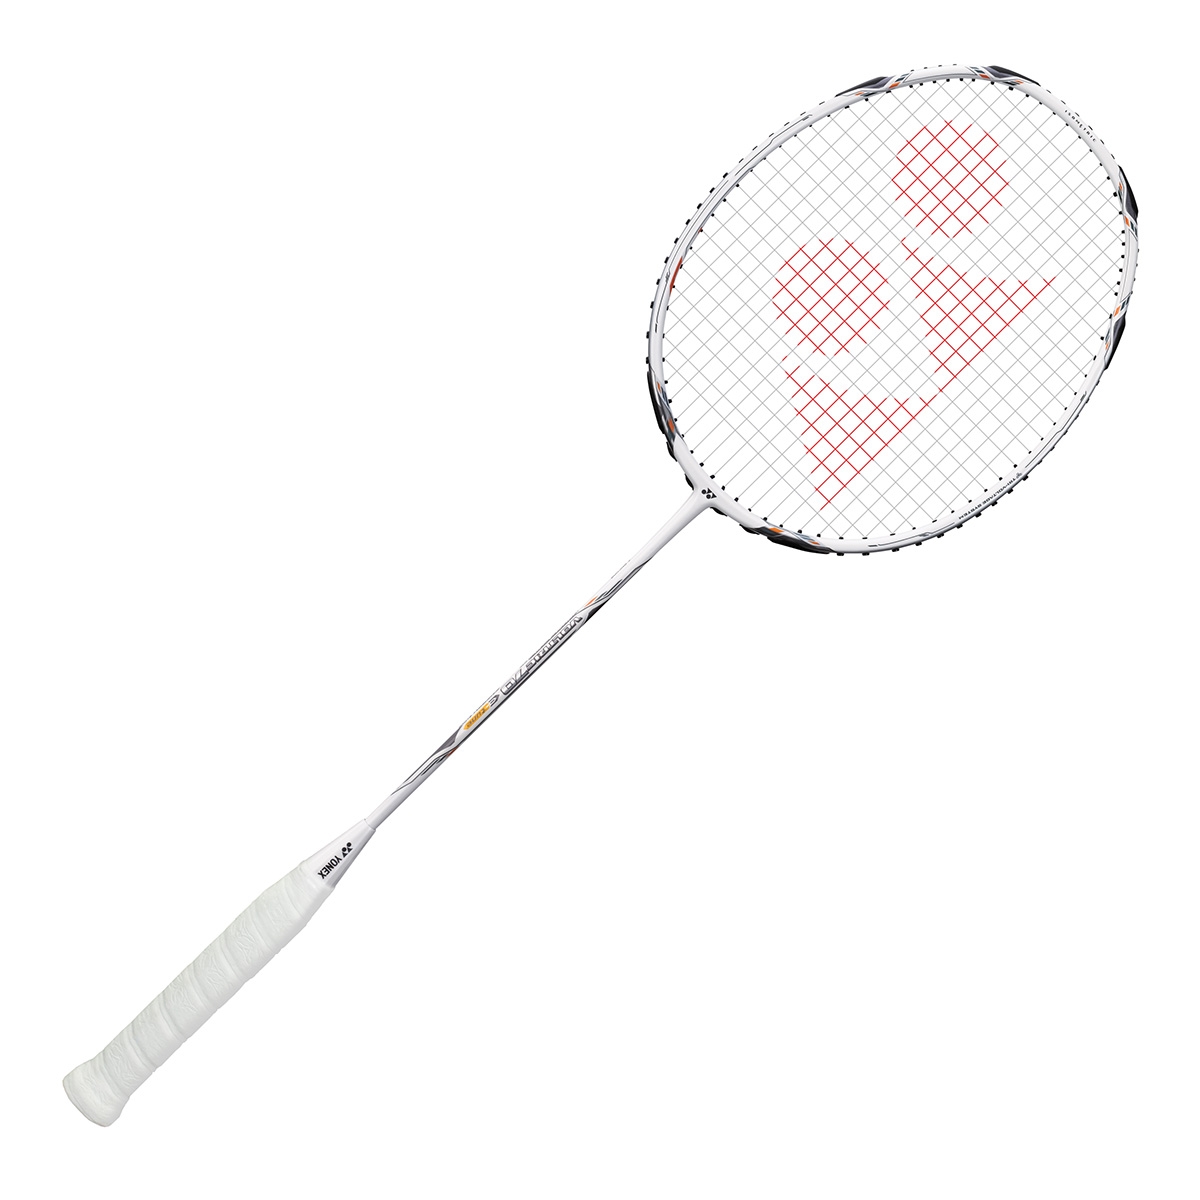 Yonex Voltric 70 E-tune badminton racket